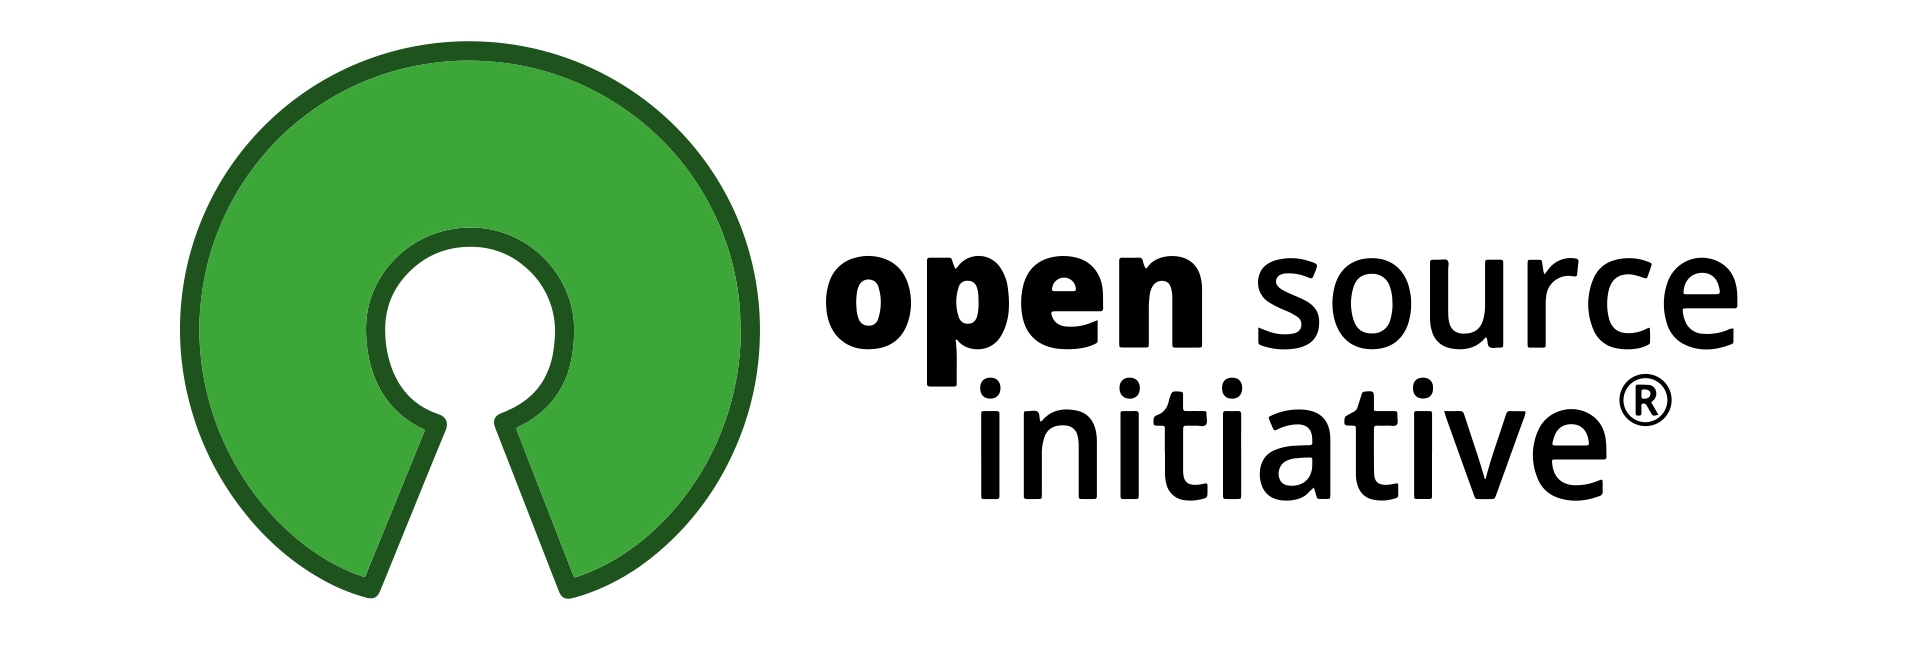 ../../_images/open-source-initiative-logo.jpeg